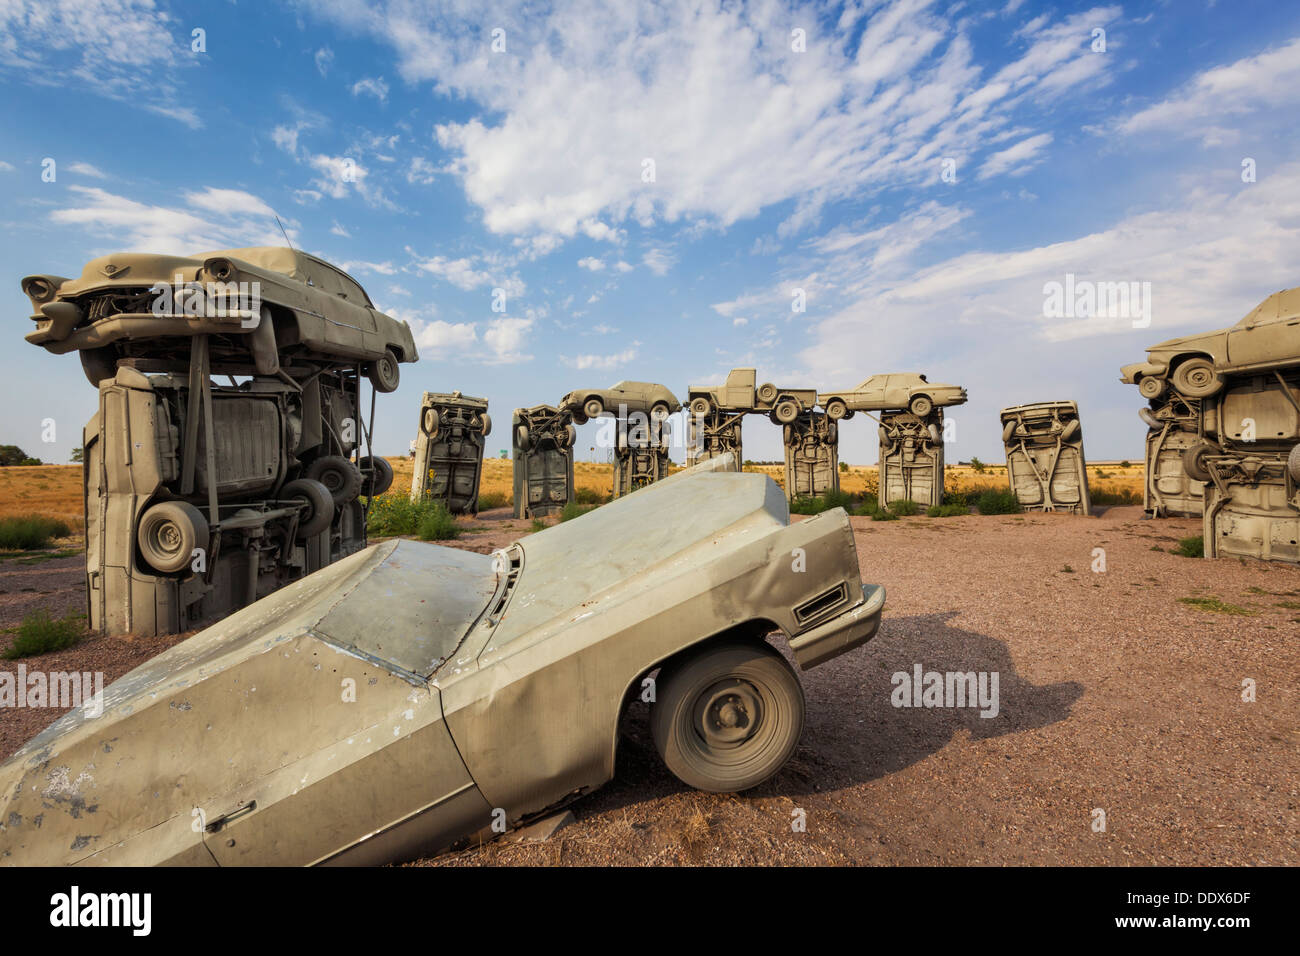 Cars arranged to replicate Stonehenge in England is called Carhenge, Alliance, Nebraska Stock Photo